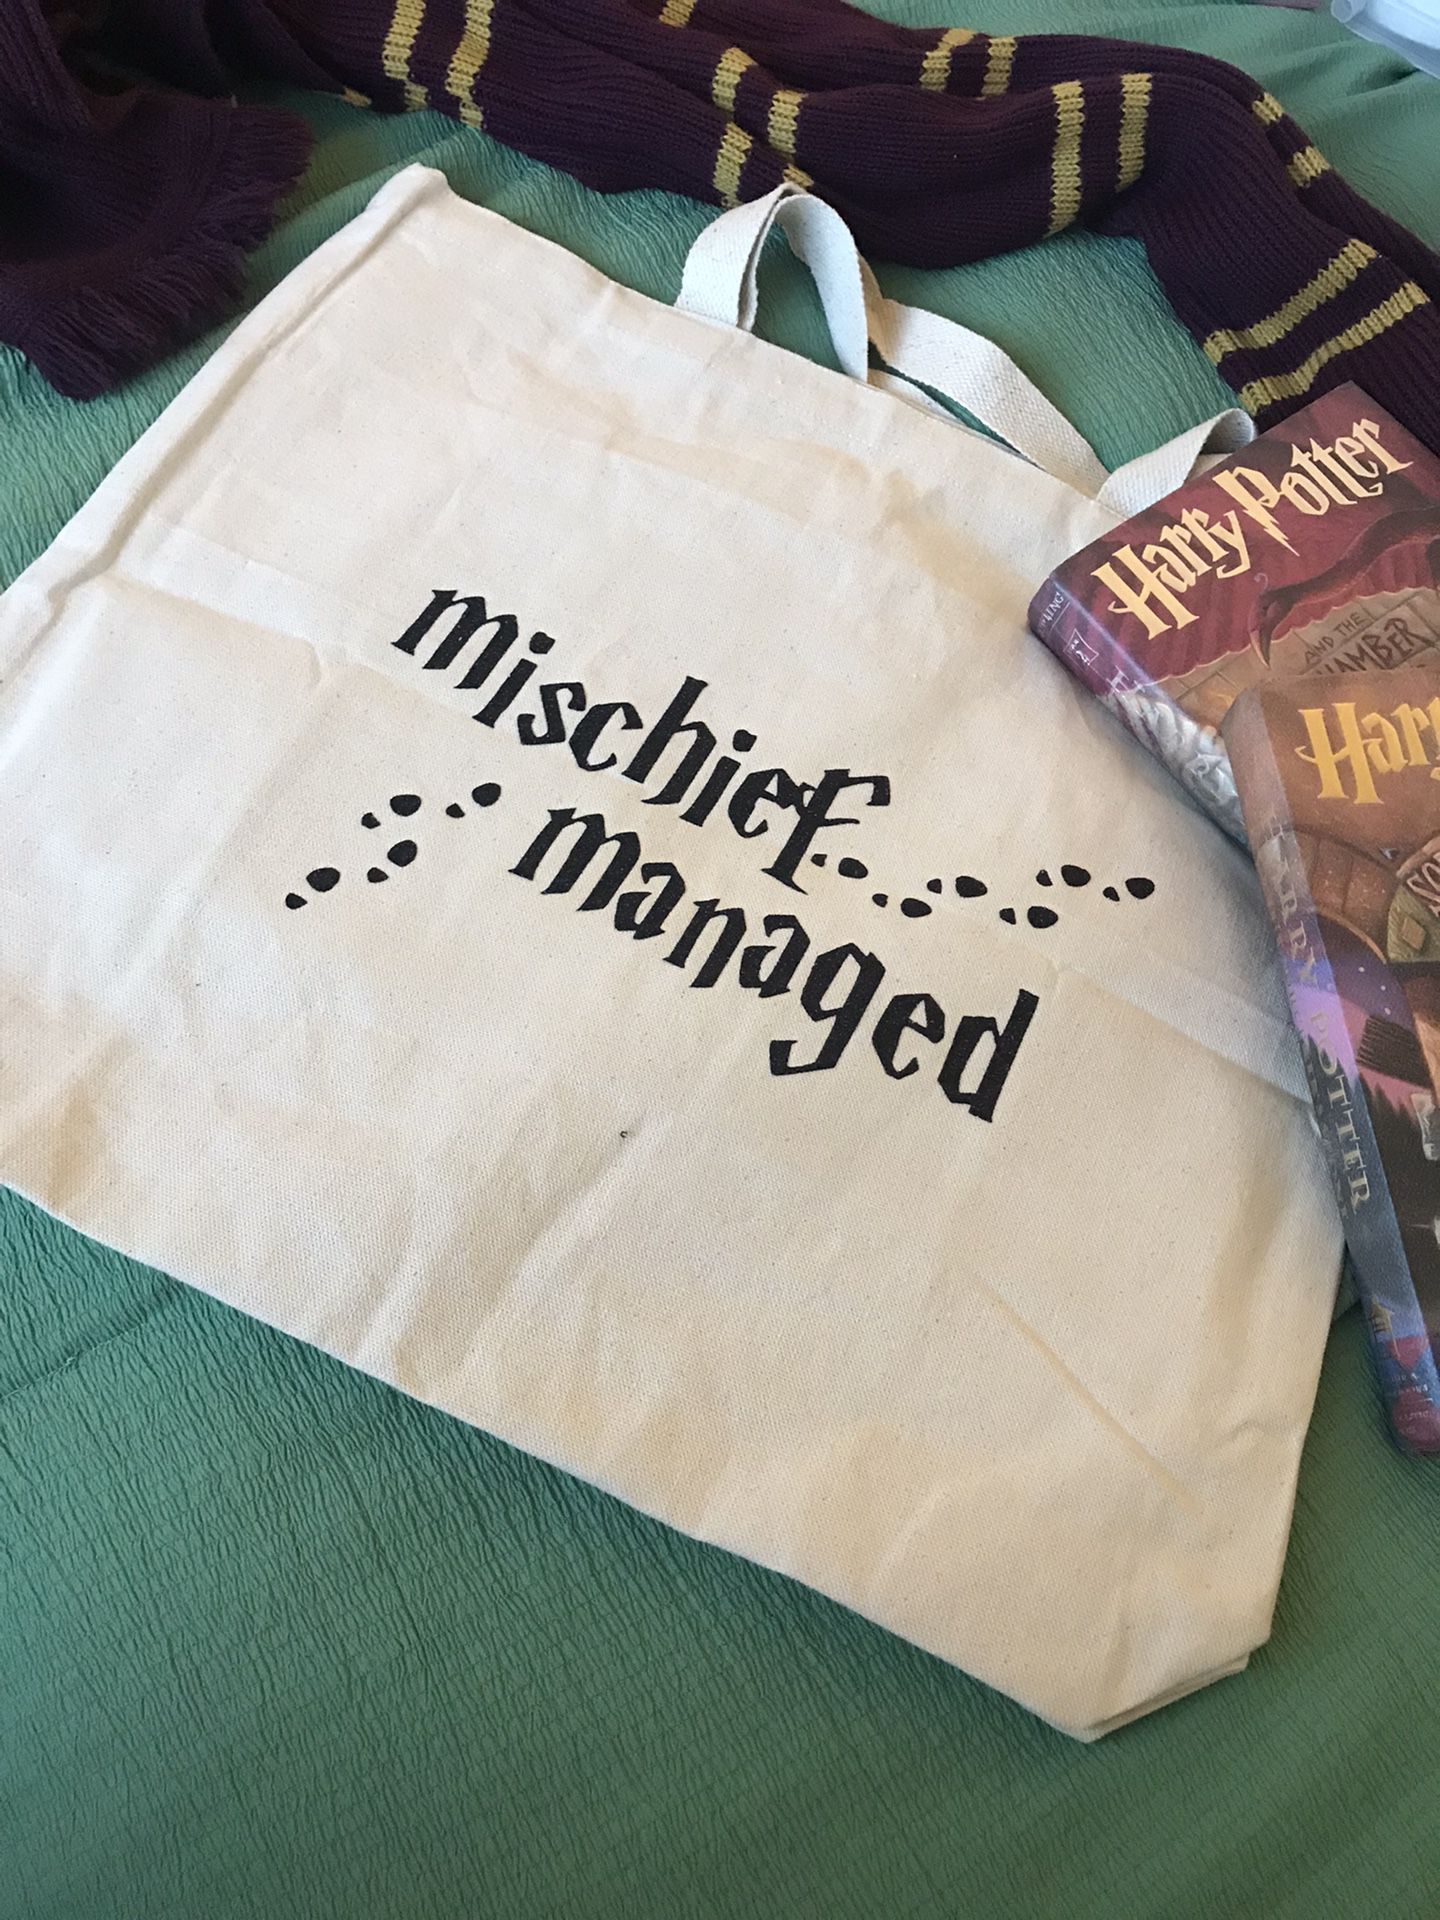 Harry Potter Tote Bag